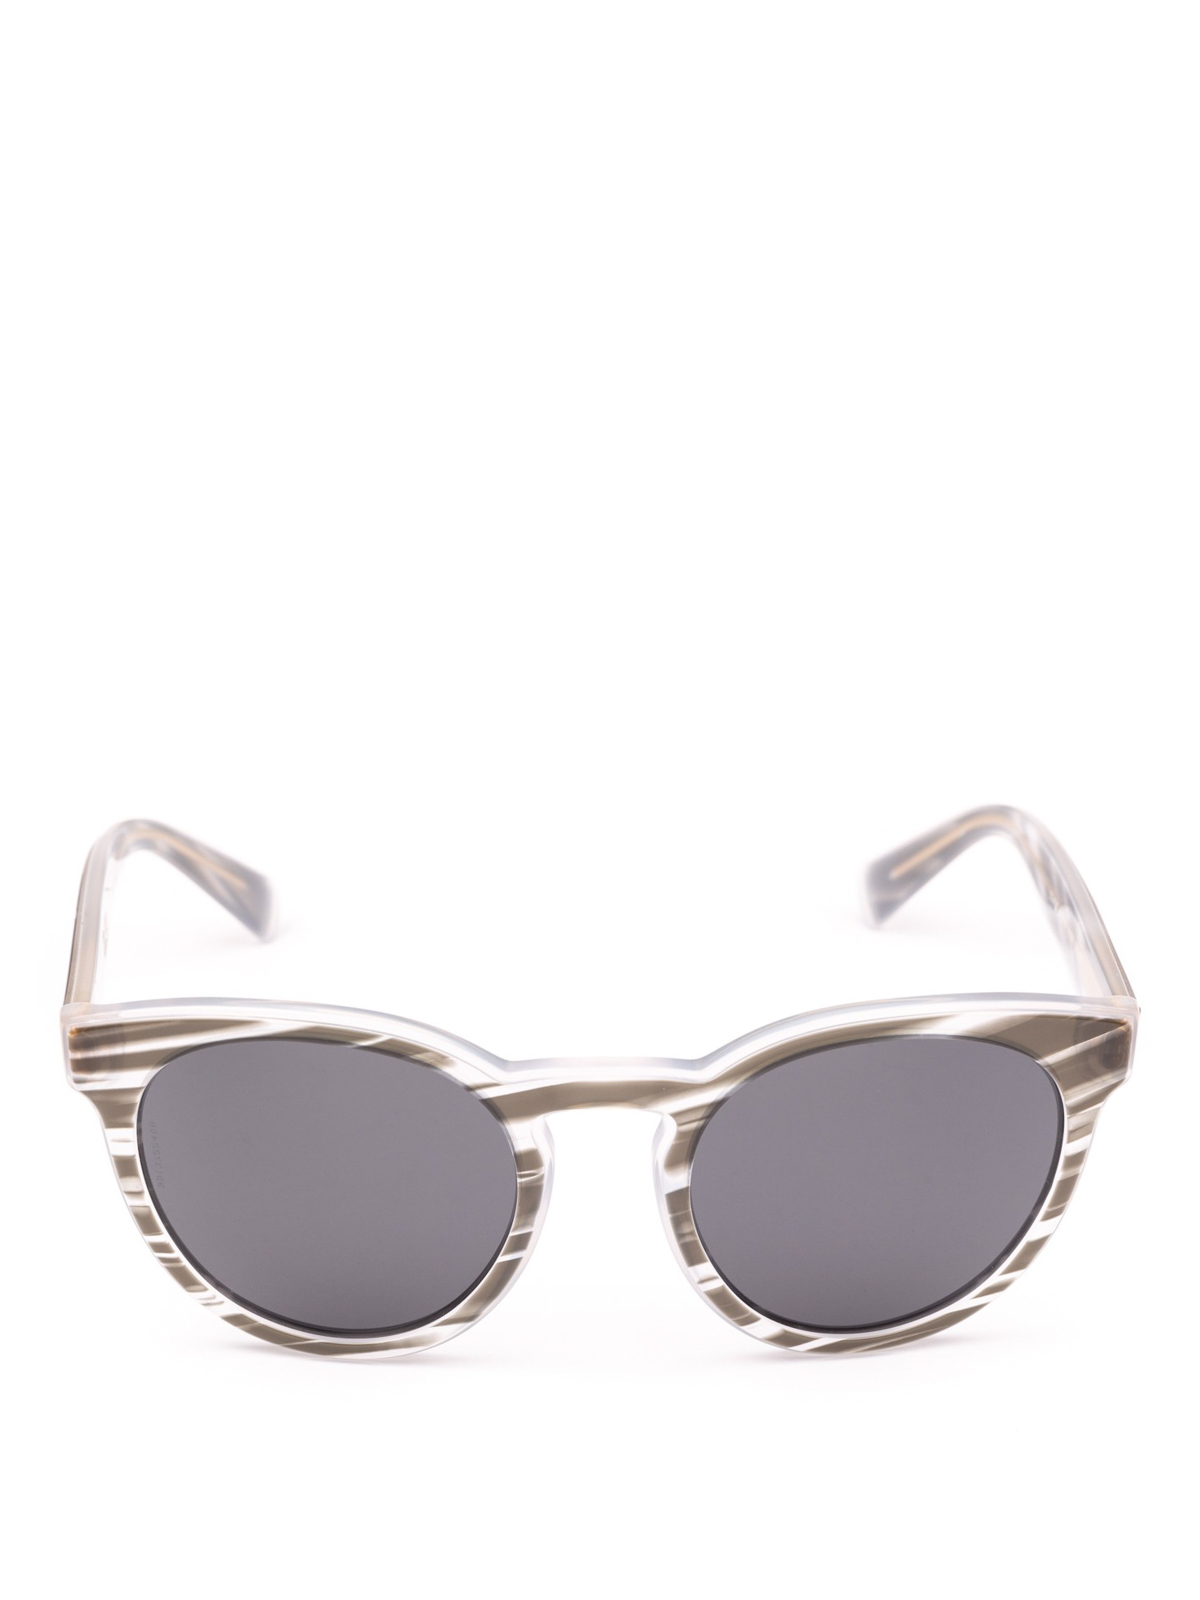 dolce and gabbana phantos sunglasses